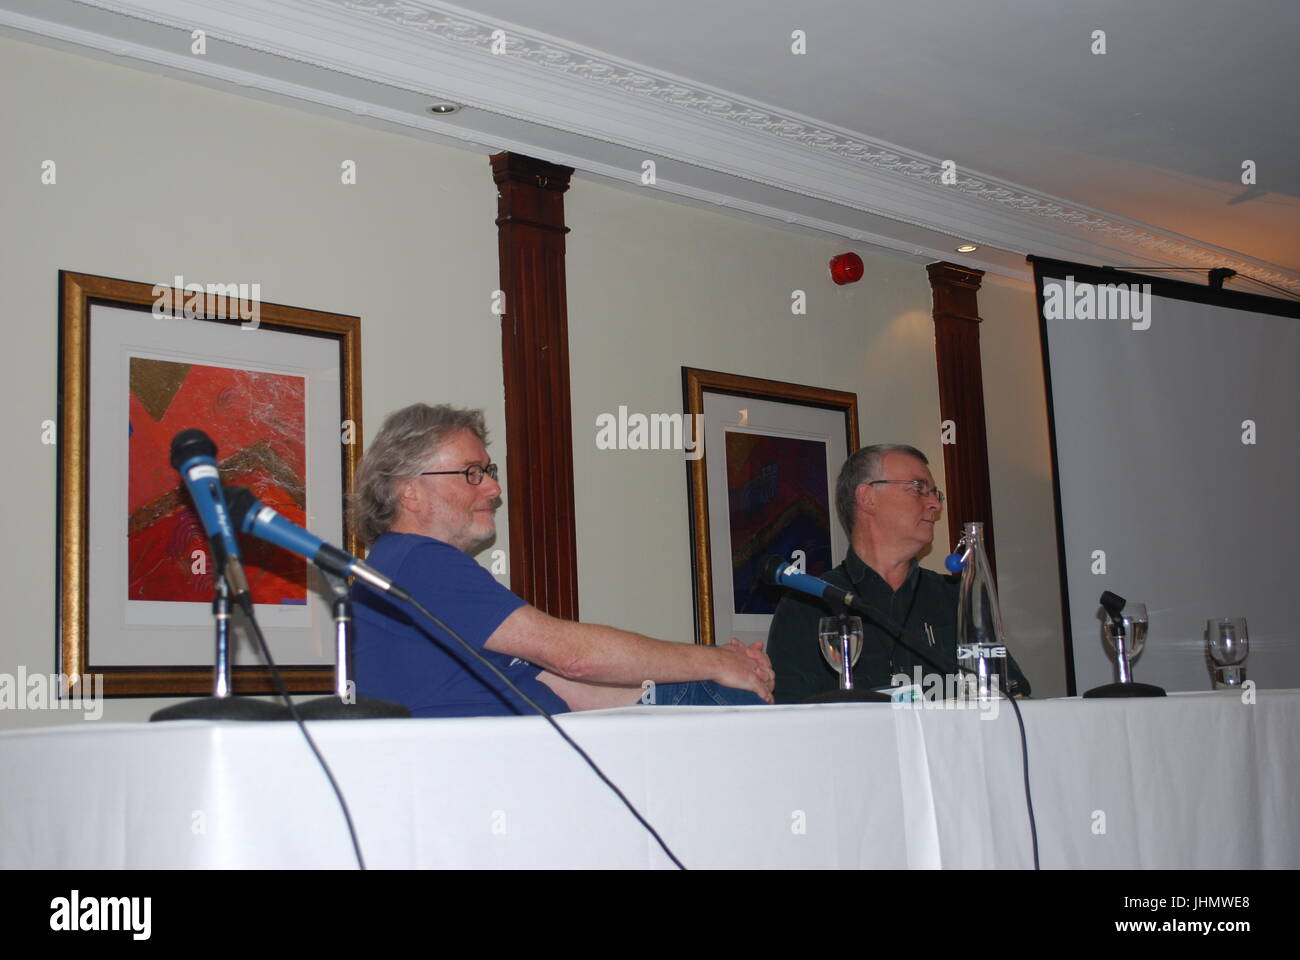 Iain banks scottish author writer hi-res stock photography and images -  Alamy